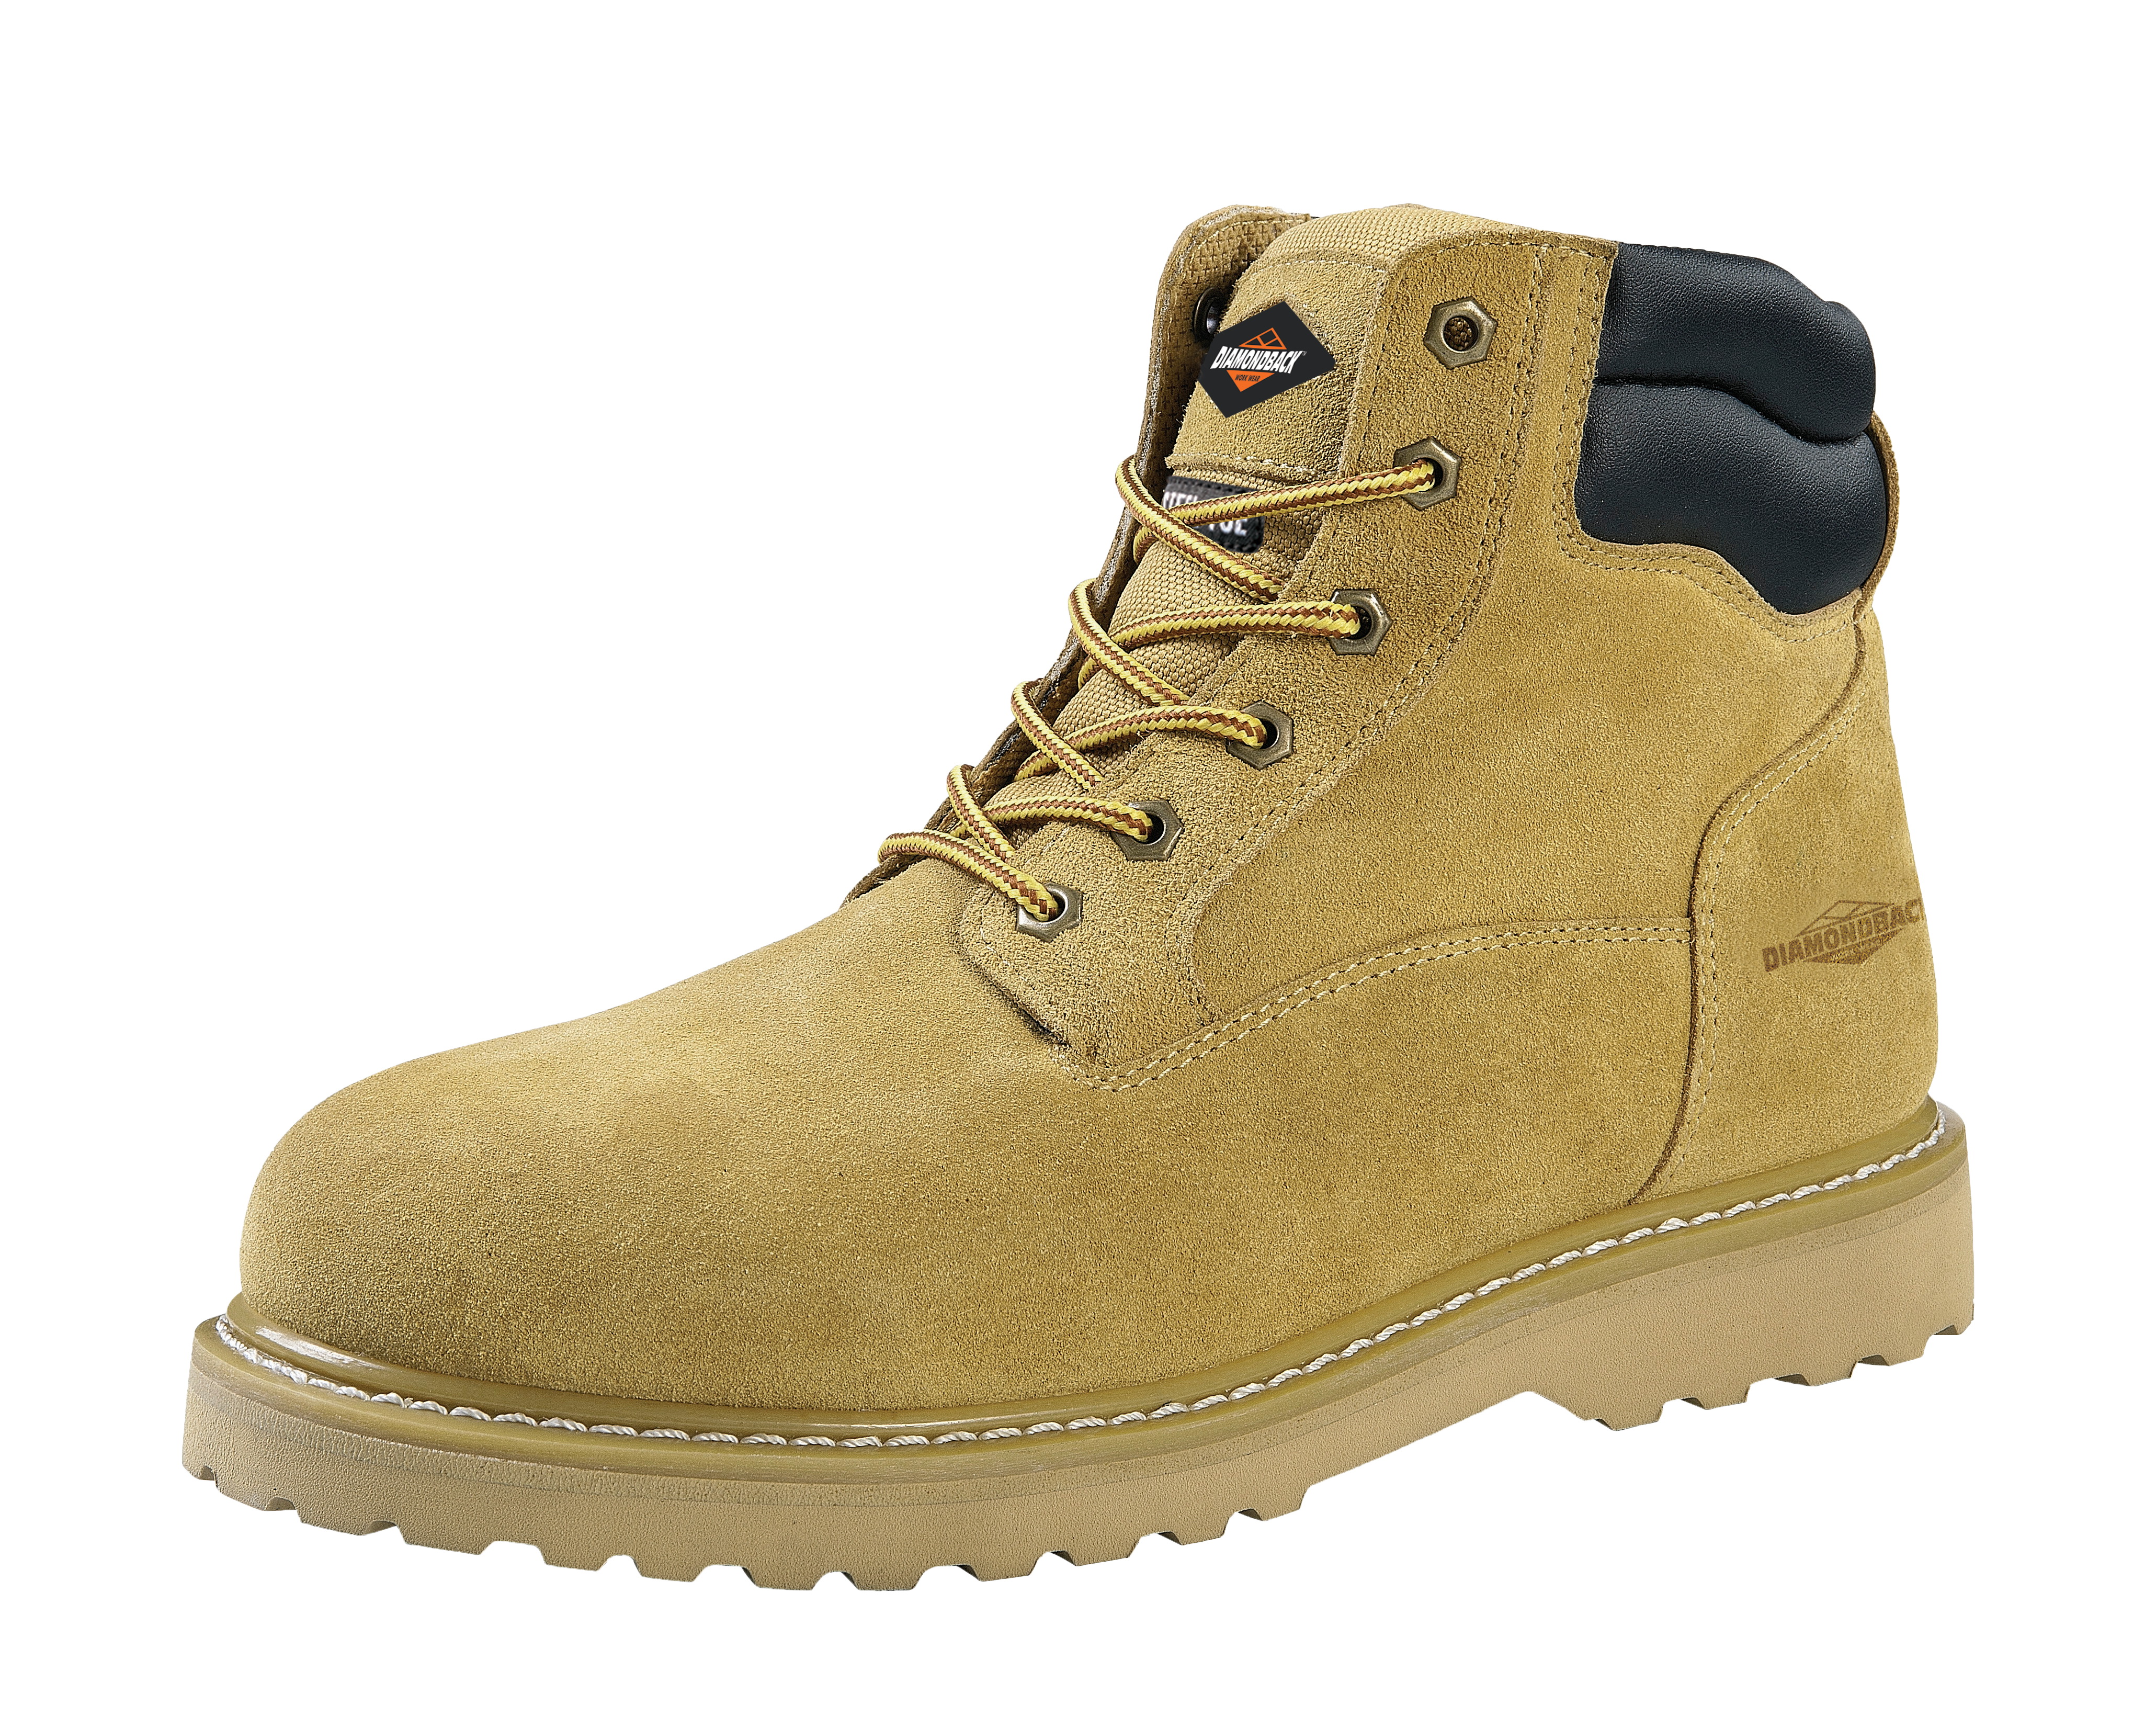 WSST-9.5 Work Boots, 9.5, Medium W, Beige, Leather Upper, Lace-Up Closure